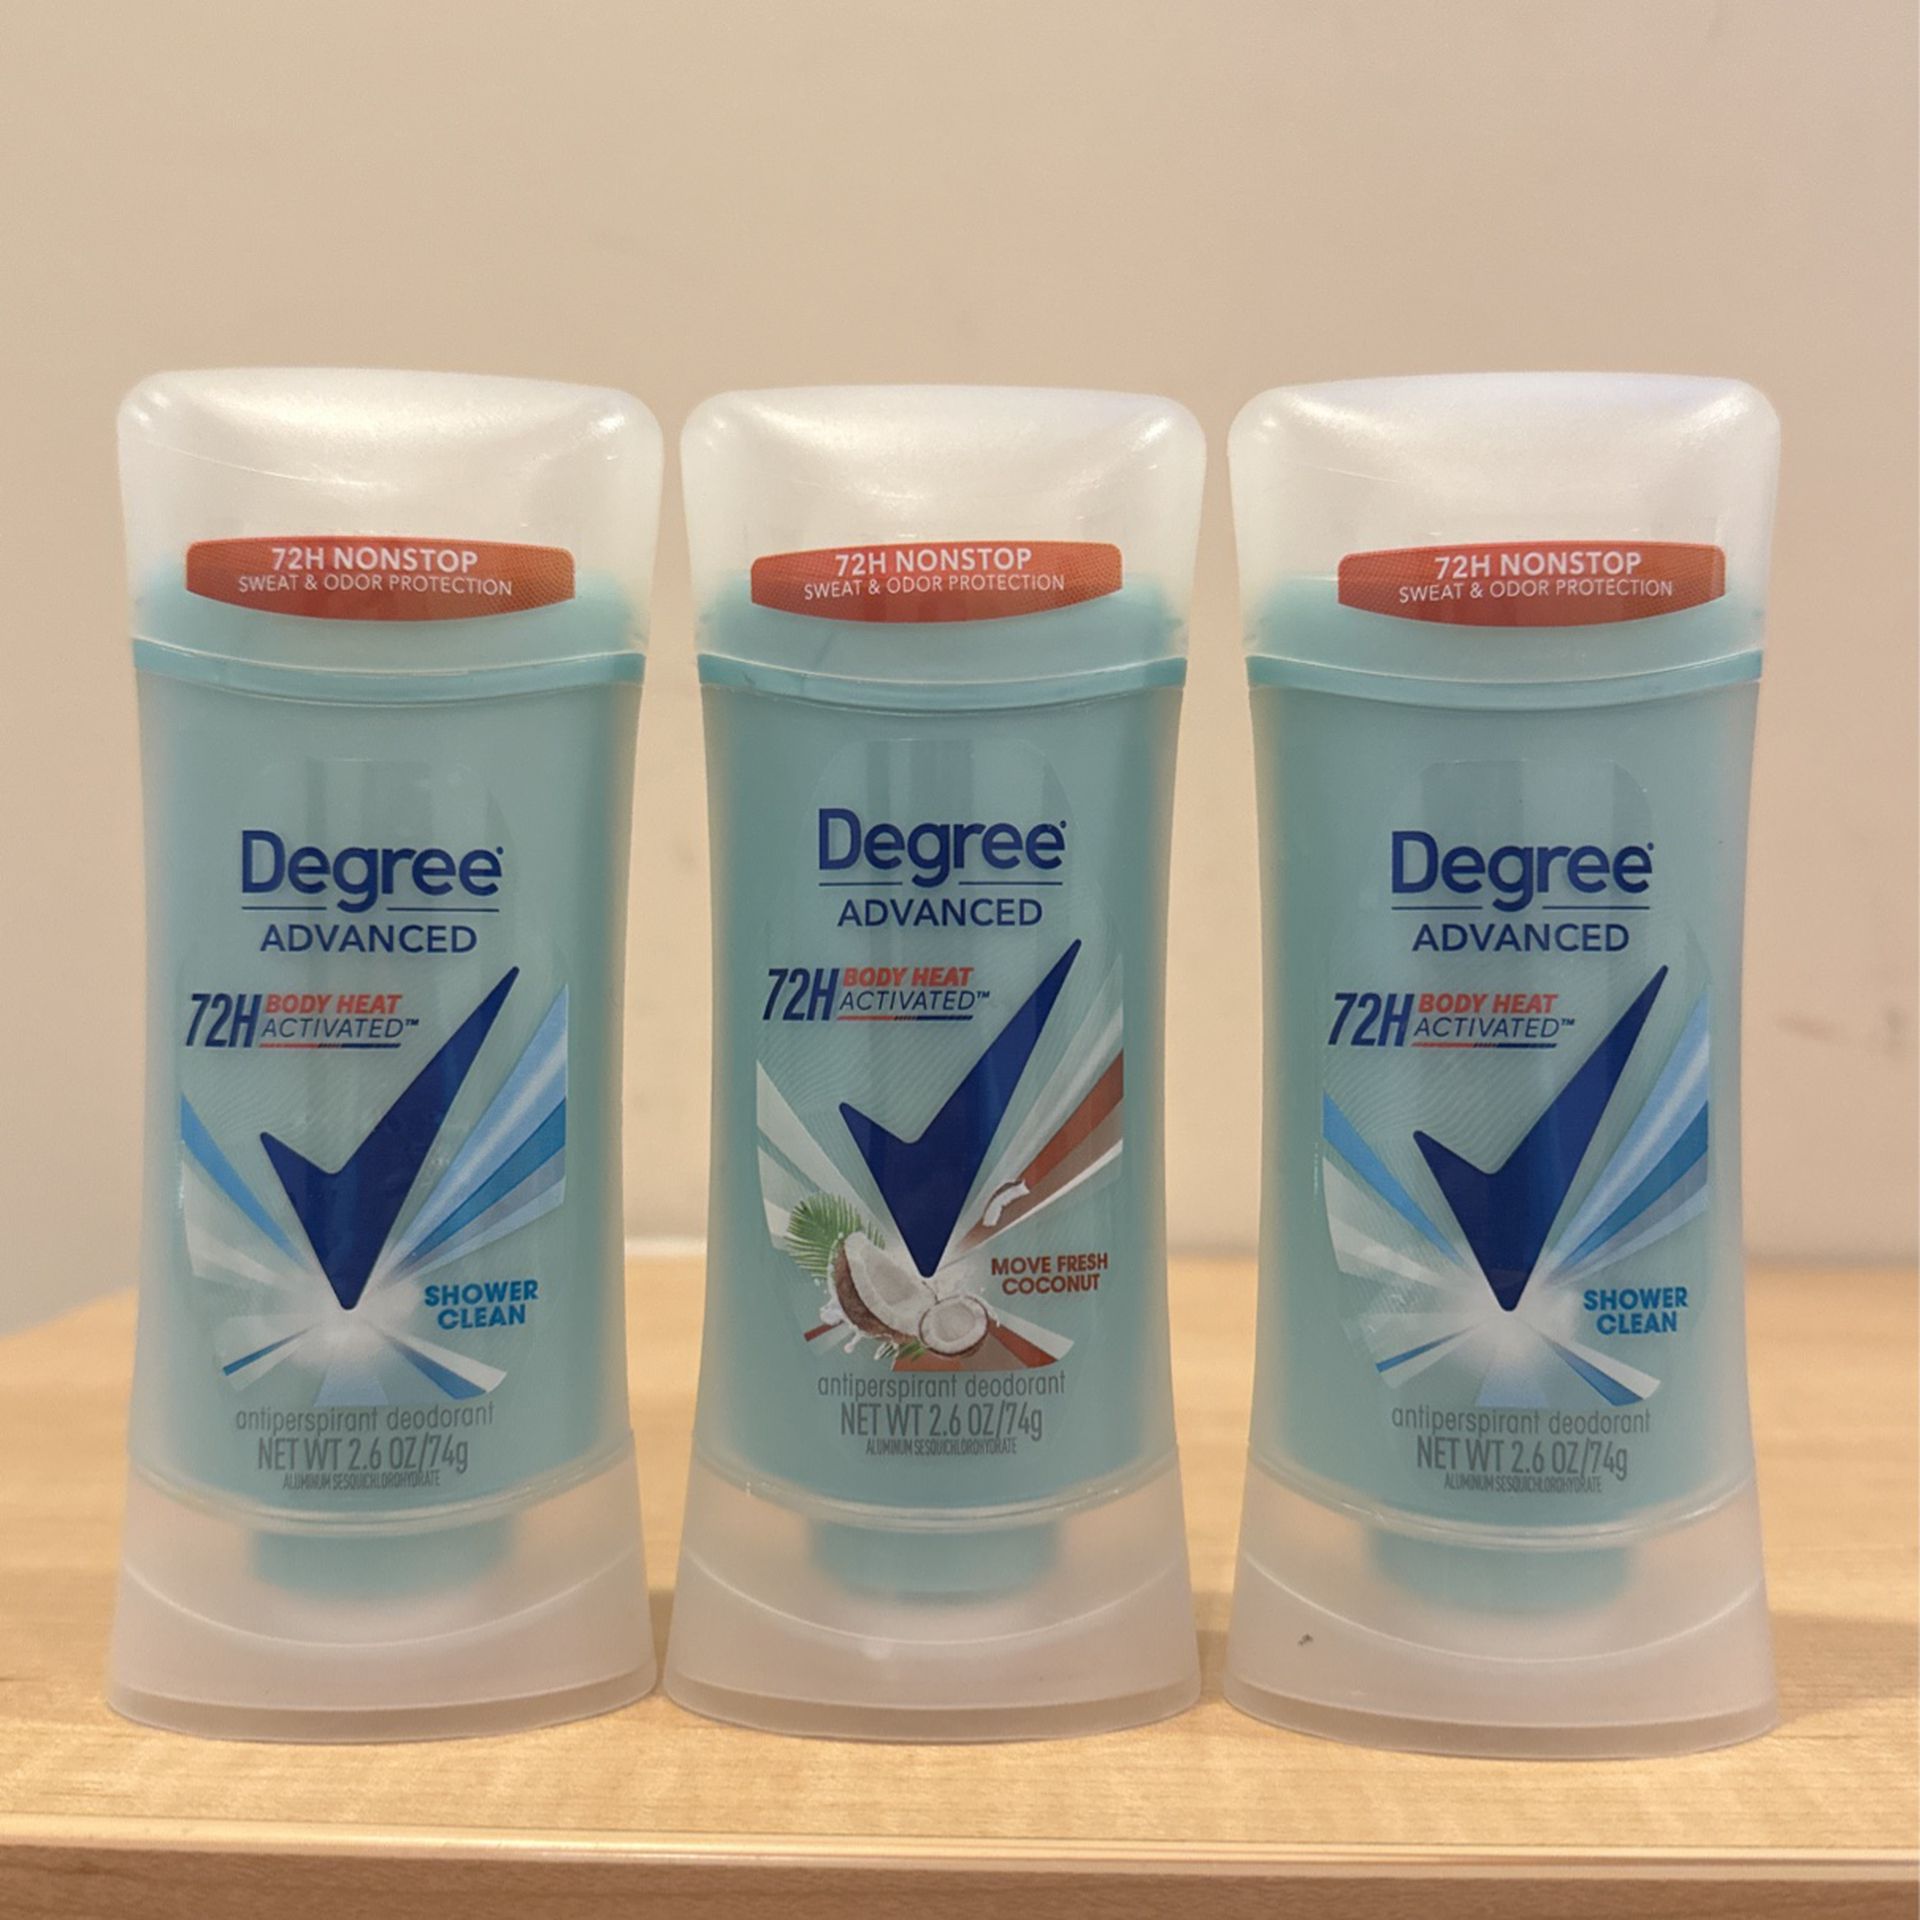 Degree Advanced solid deodorant 2.6 oz: $3 each